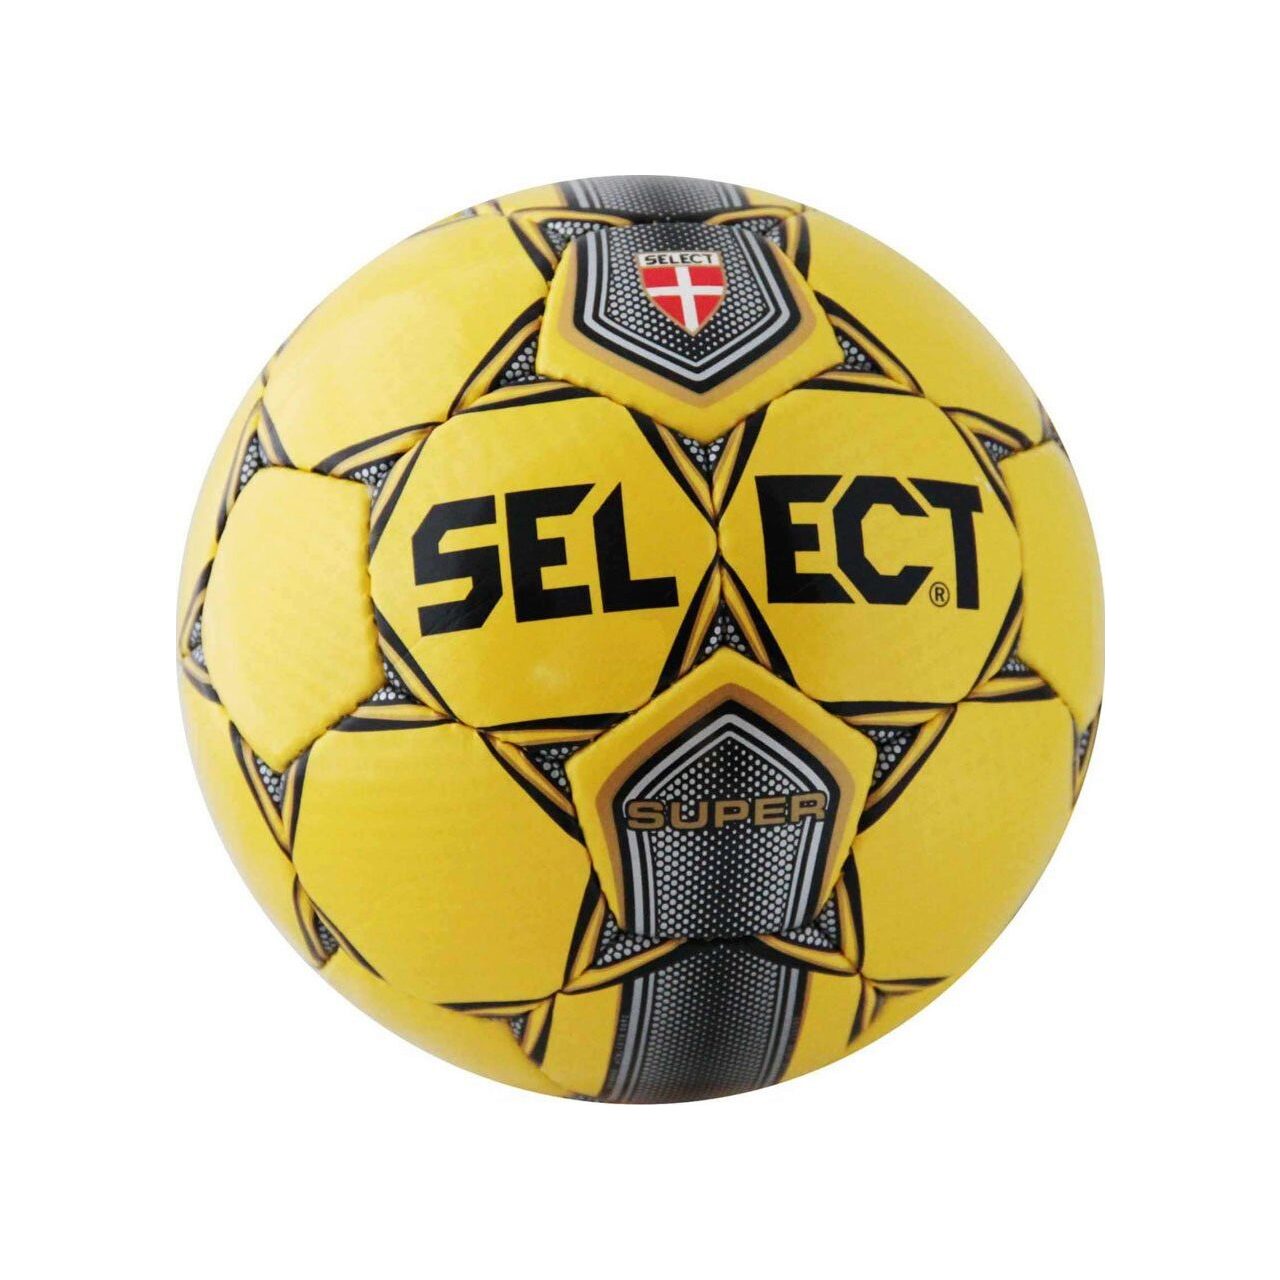 Minge fotbal Select Super 5 13940, piele sintetica, marimea 5